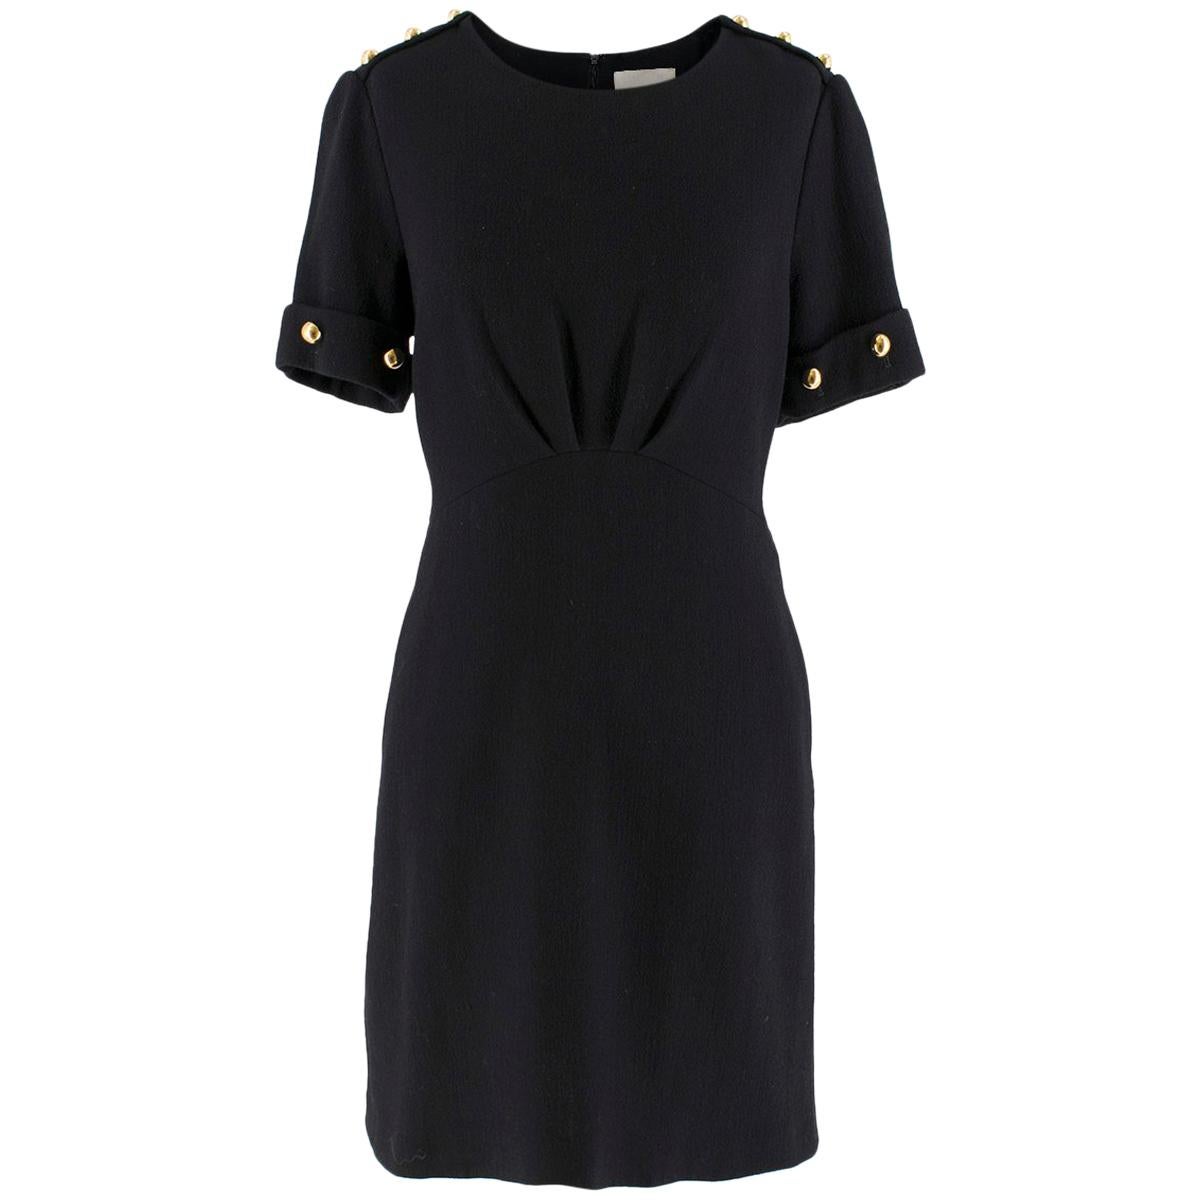 3.1 Phillip Lim Black Studded Sleeve Dress US 8 For Sale